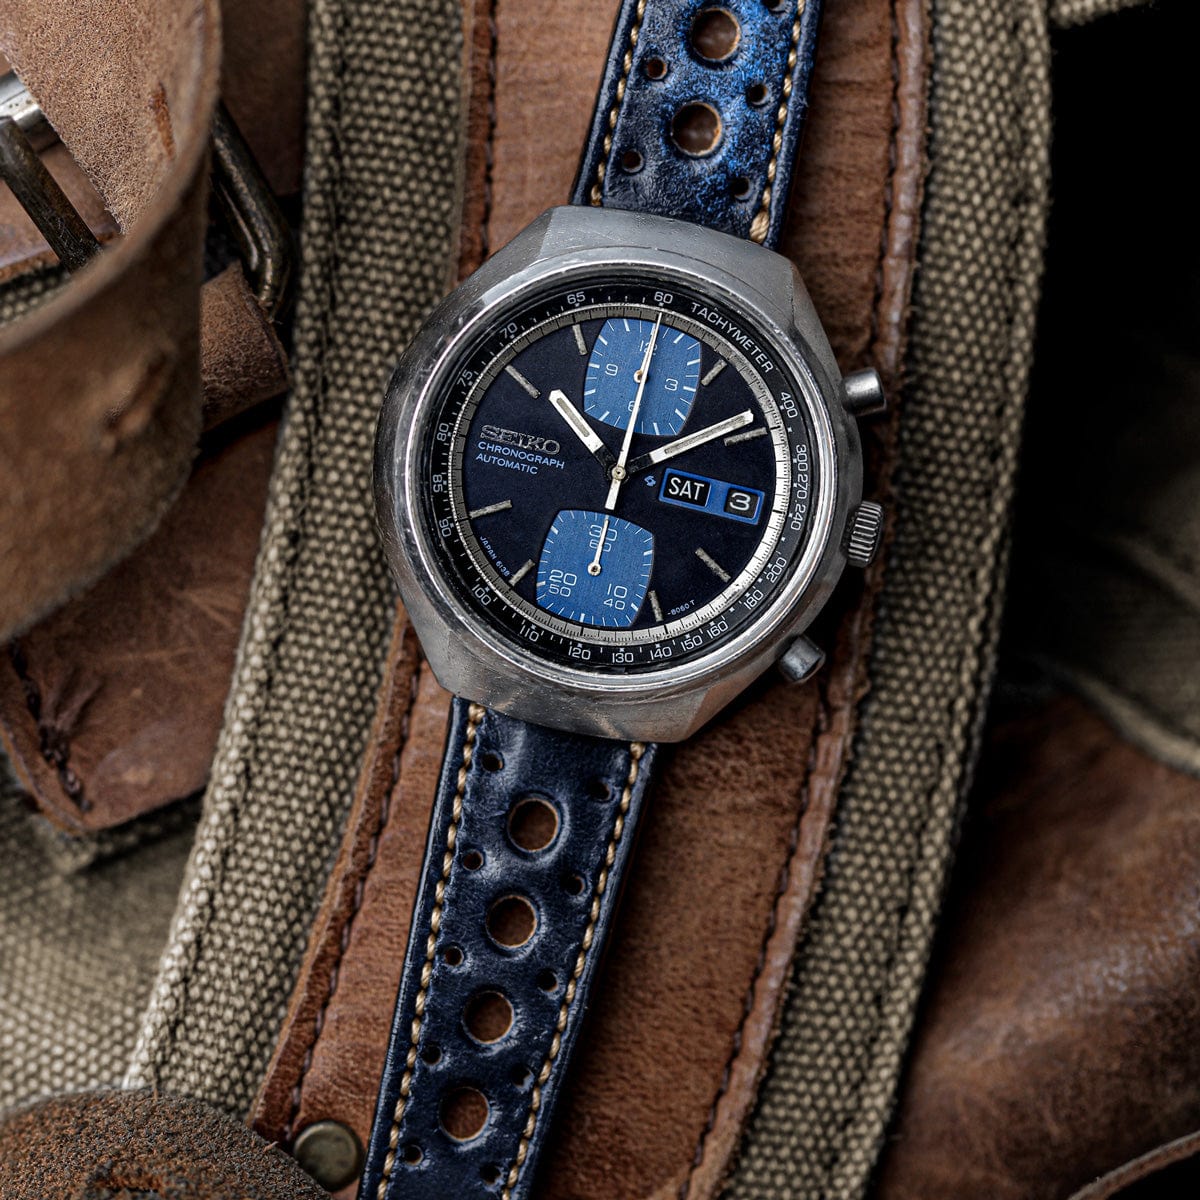 Radstock Racing Style Genuine Leather Watch Strap - Vintage Blue